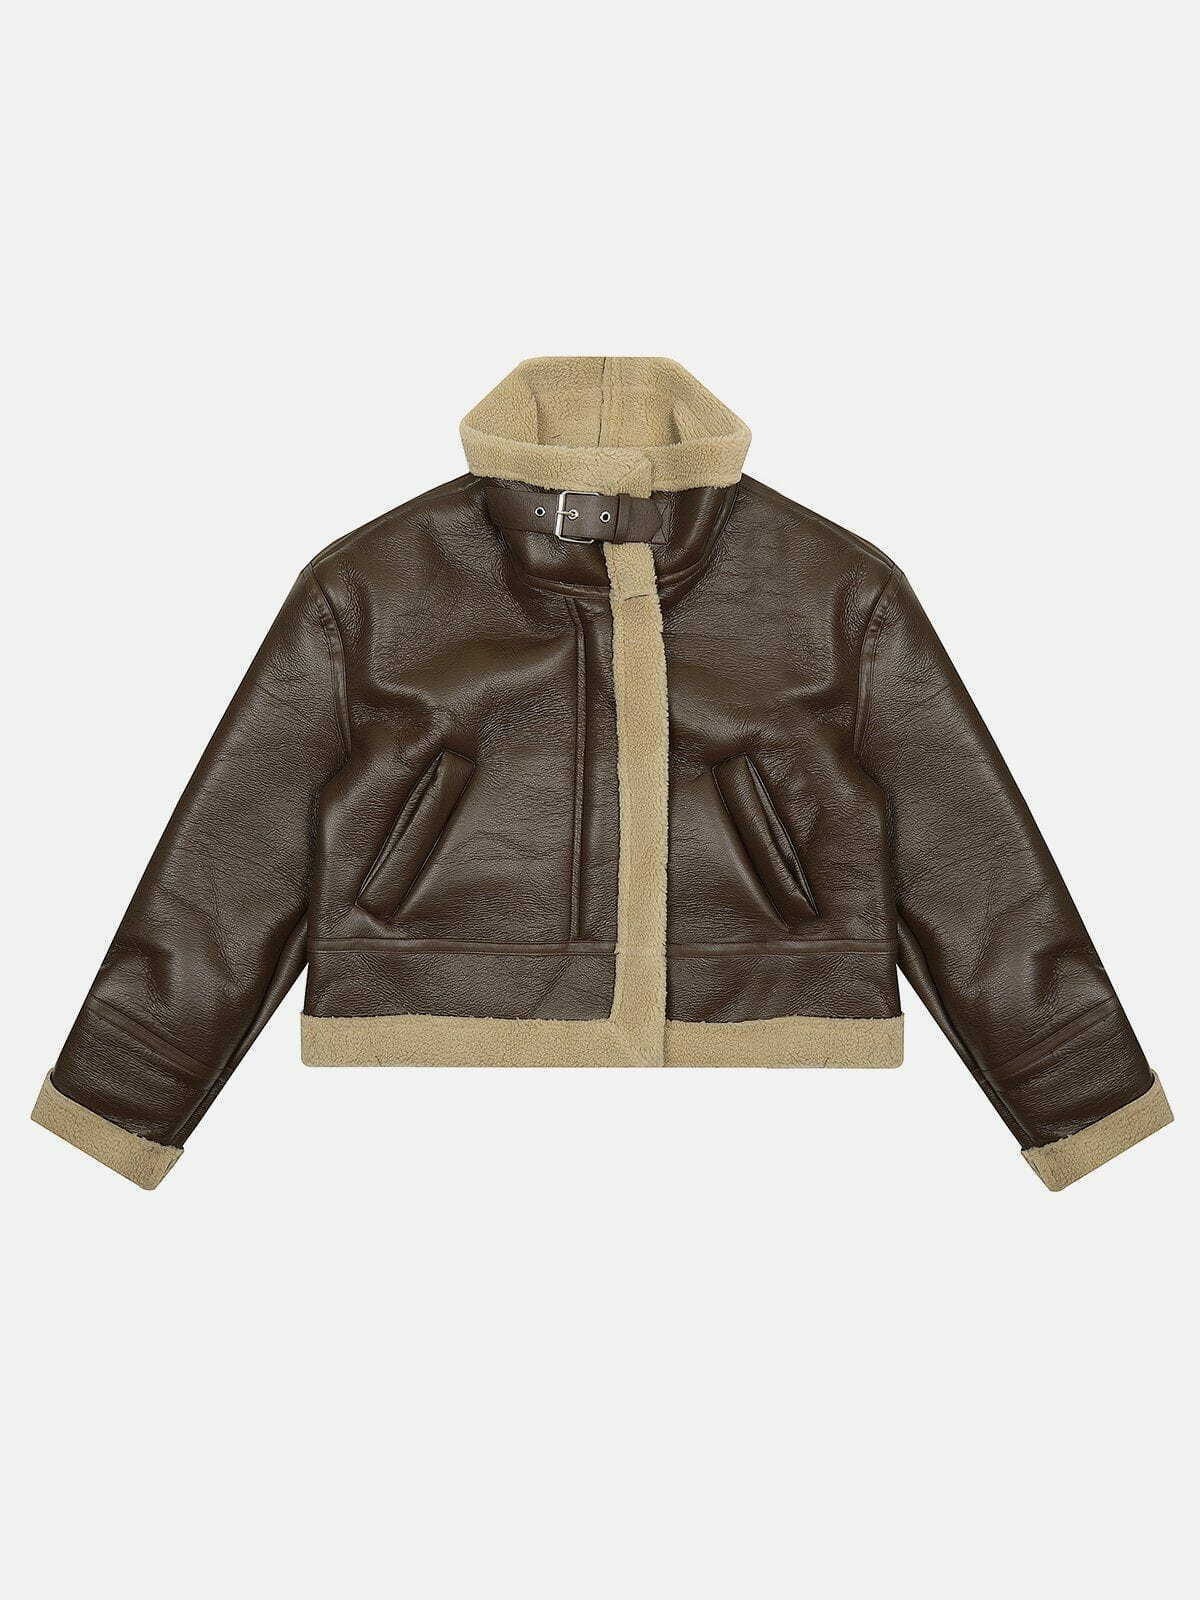 sleek faux leather racing jacket   urban & youthful style 5959